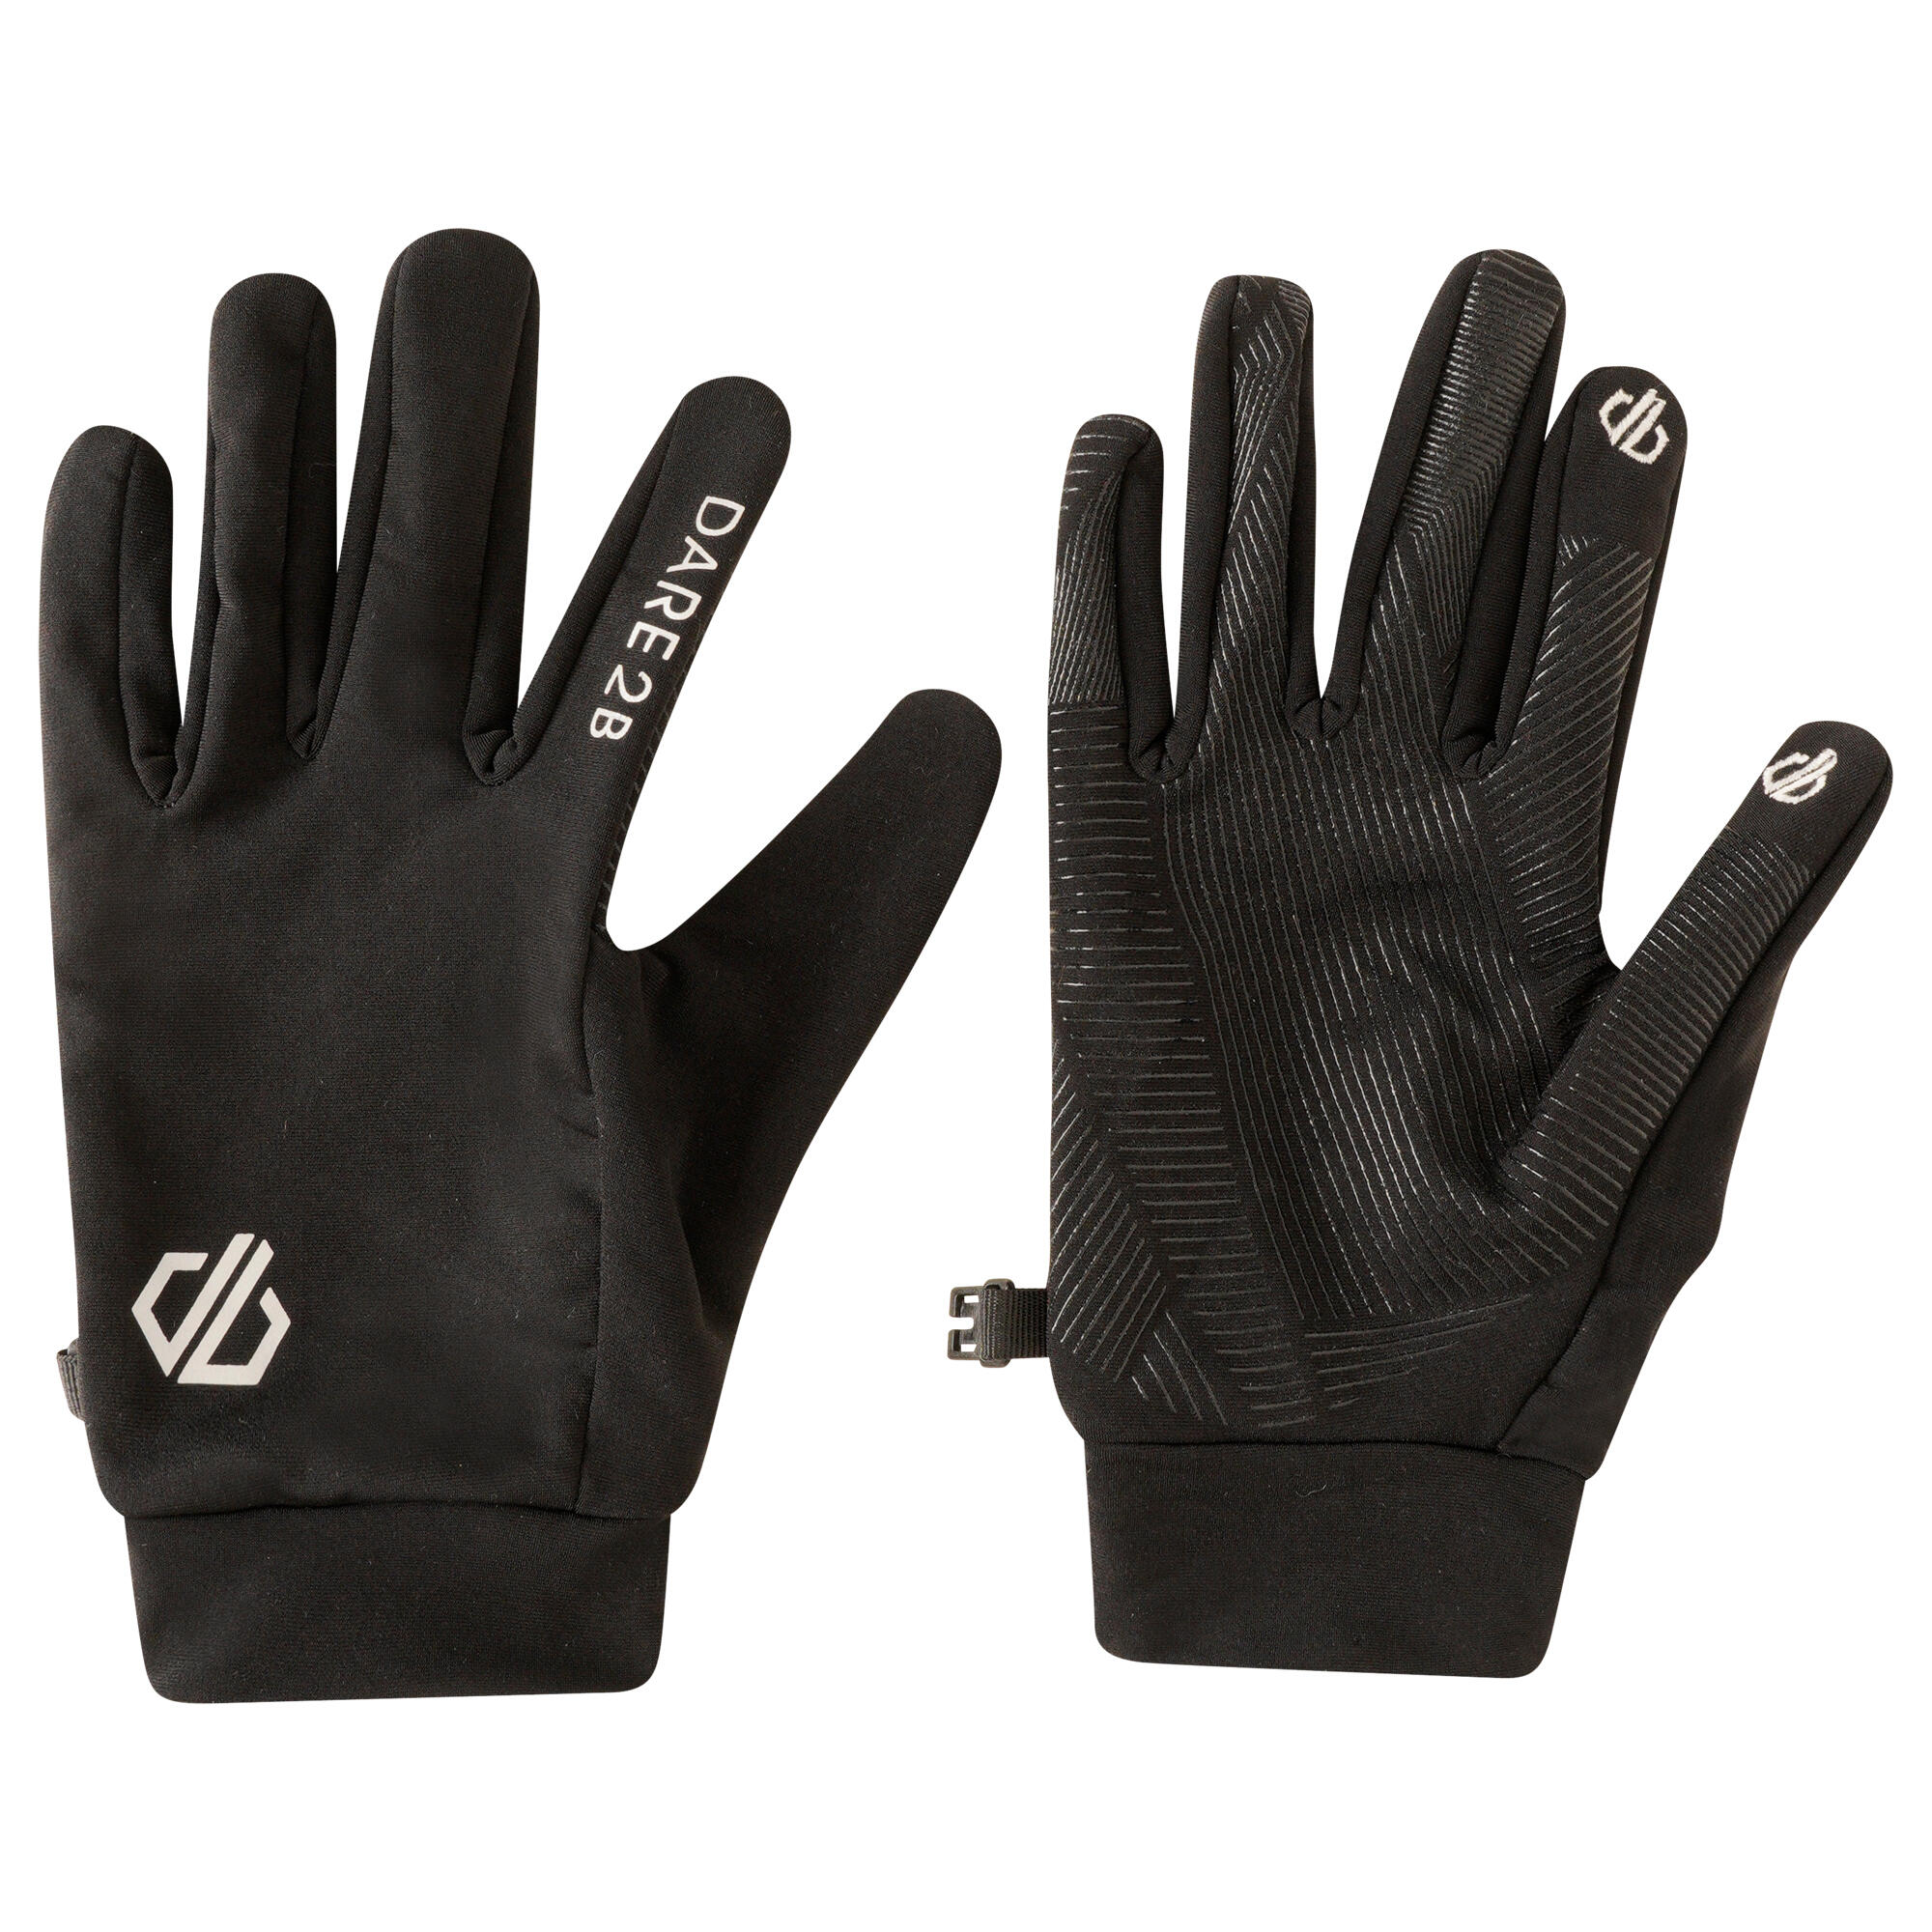 Cogent II Adults' Cycling Gloves 1/2